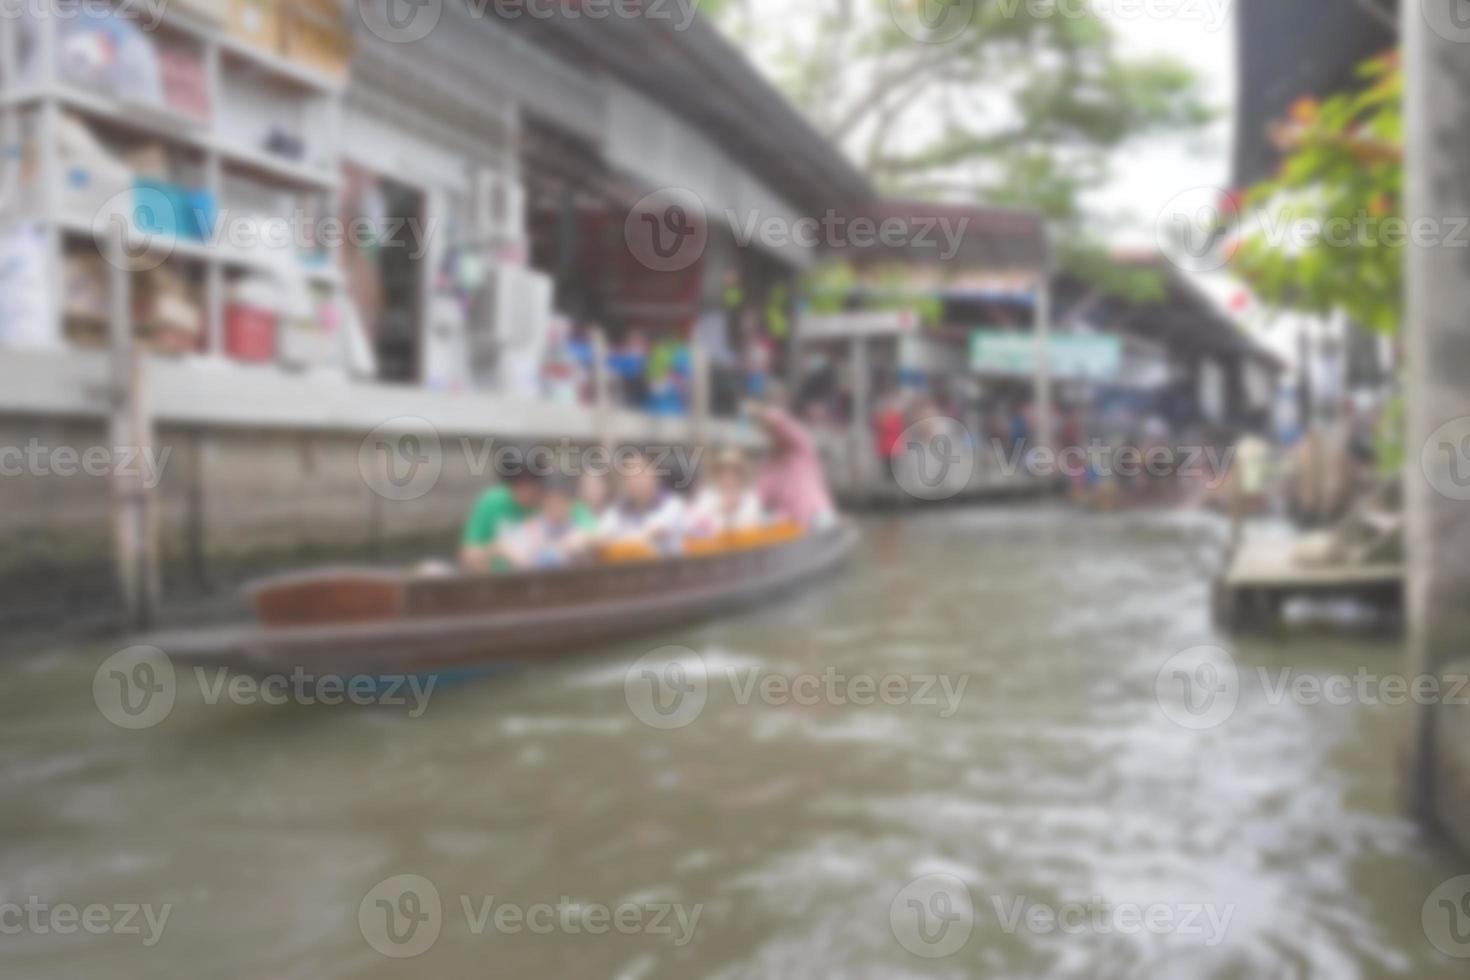 Damnoen Saduak Floating Market blur background of Illustration,Abstract Blurred Image photo